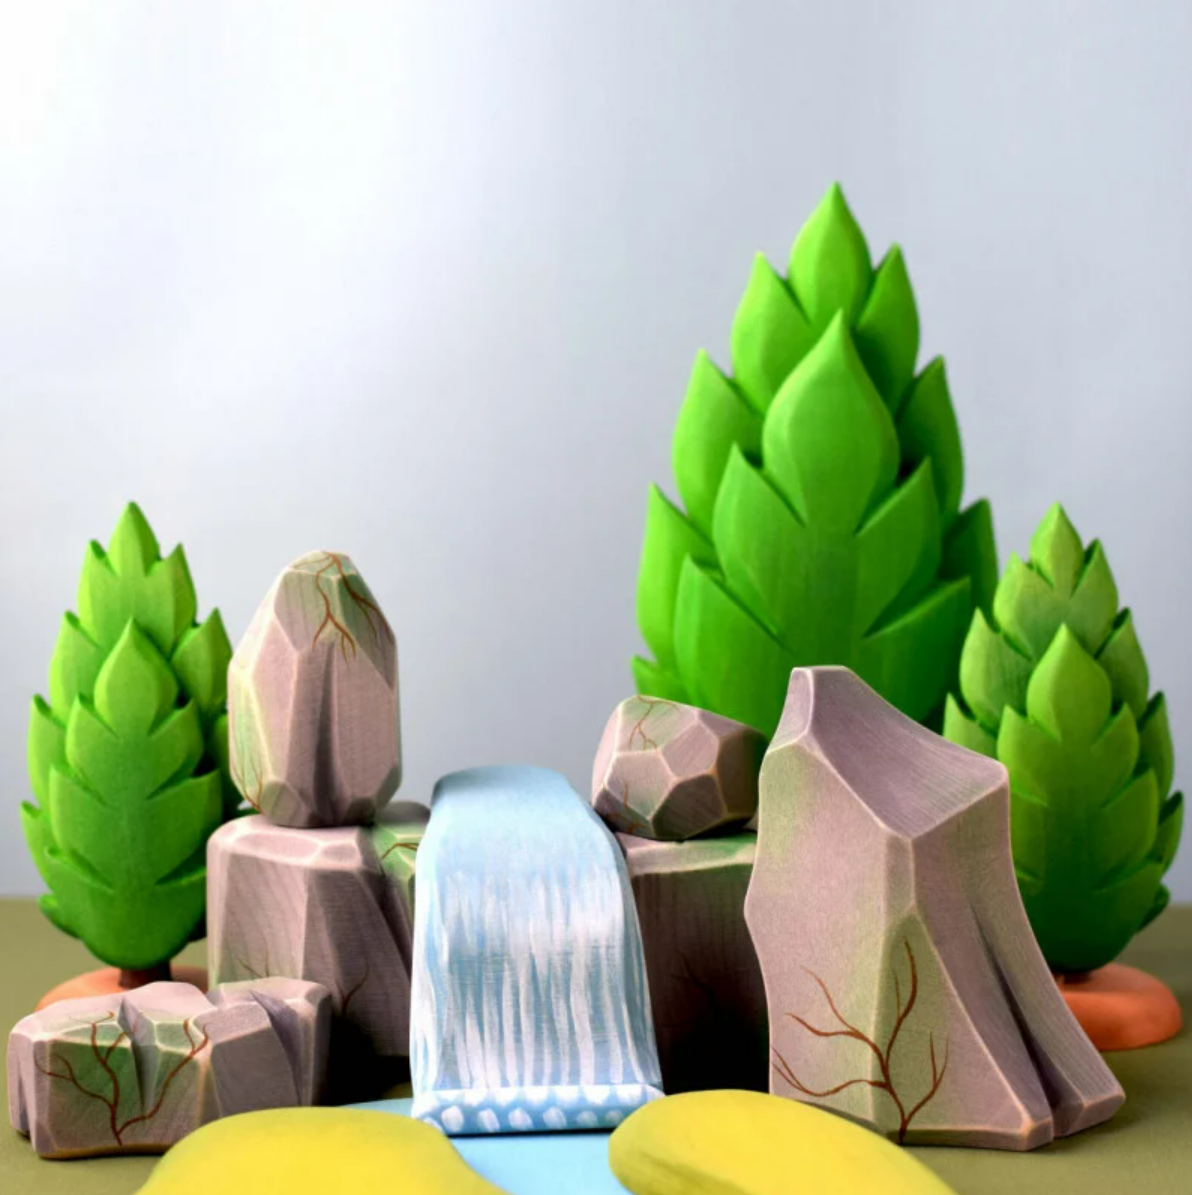 Bumbu Toys River Plate, Waterfall and Mossy Rocks Set